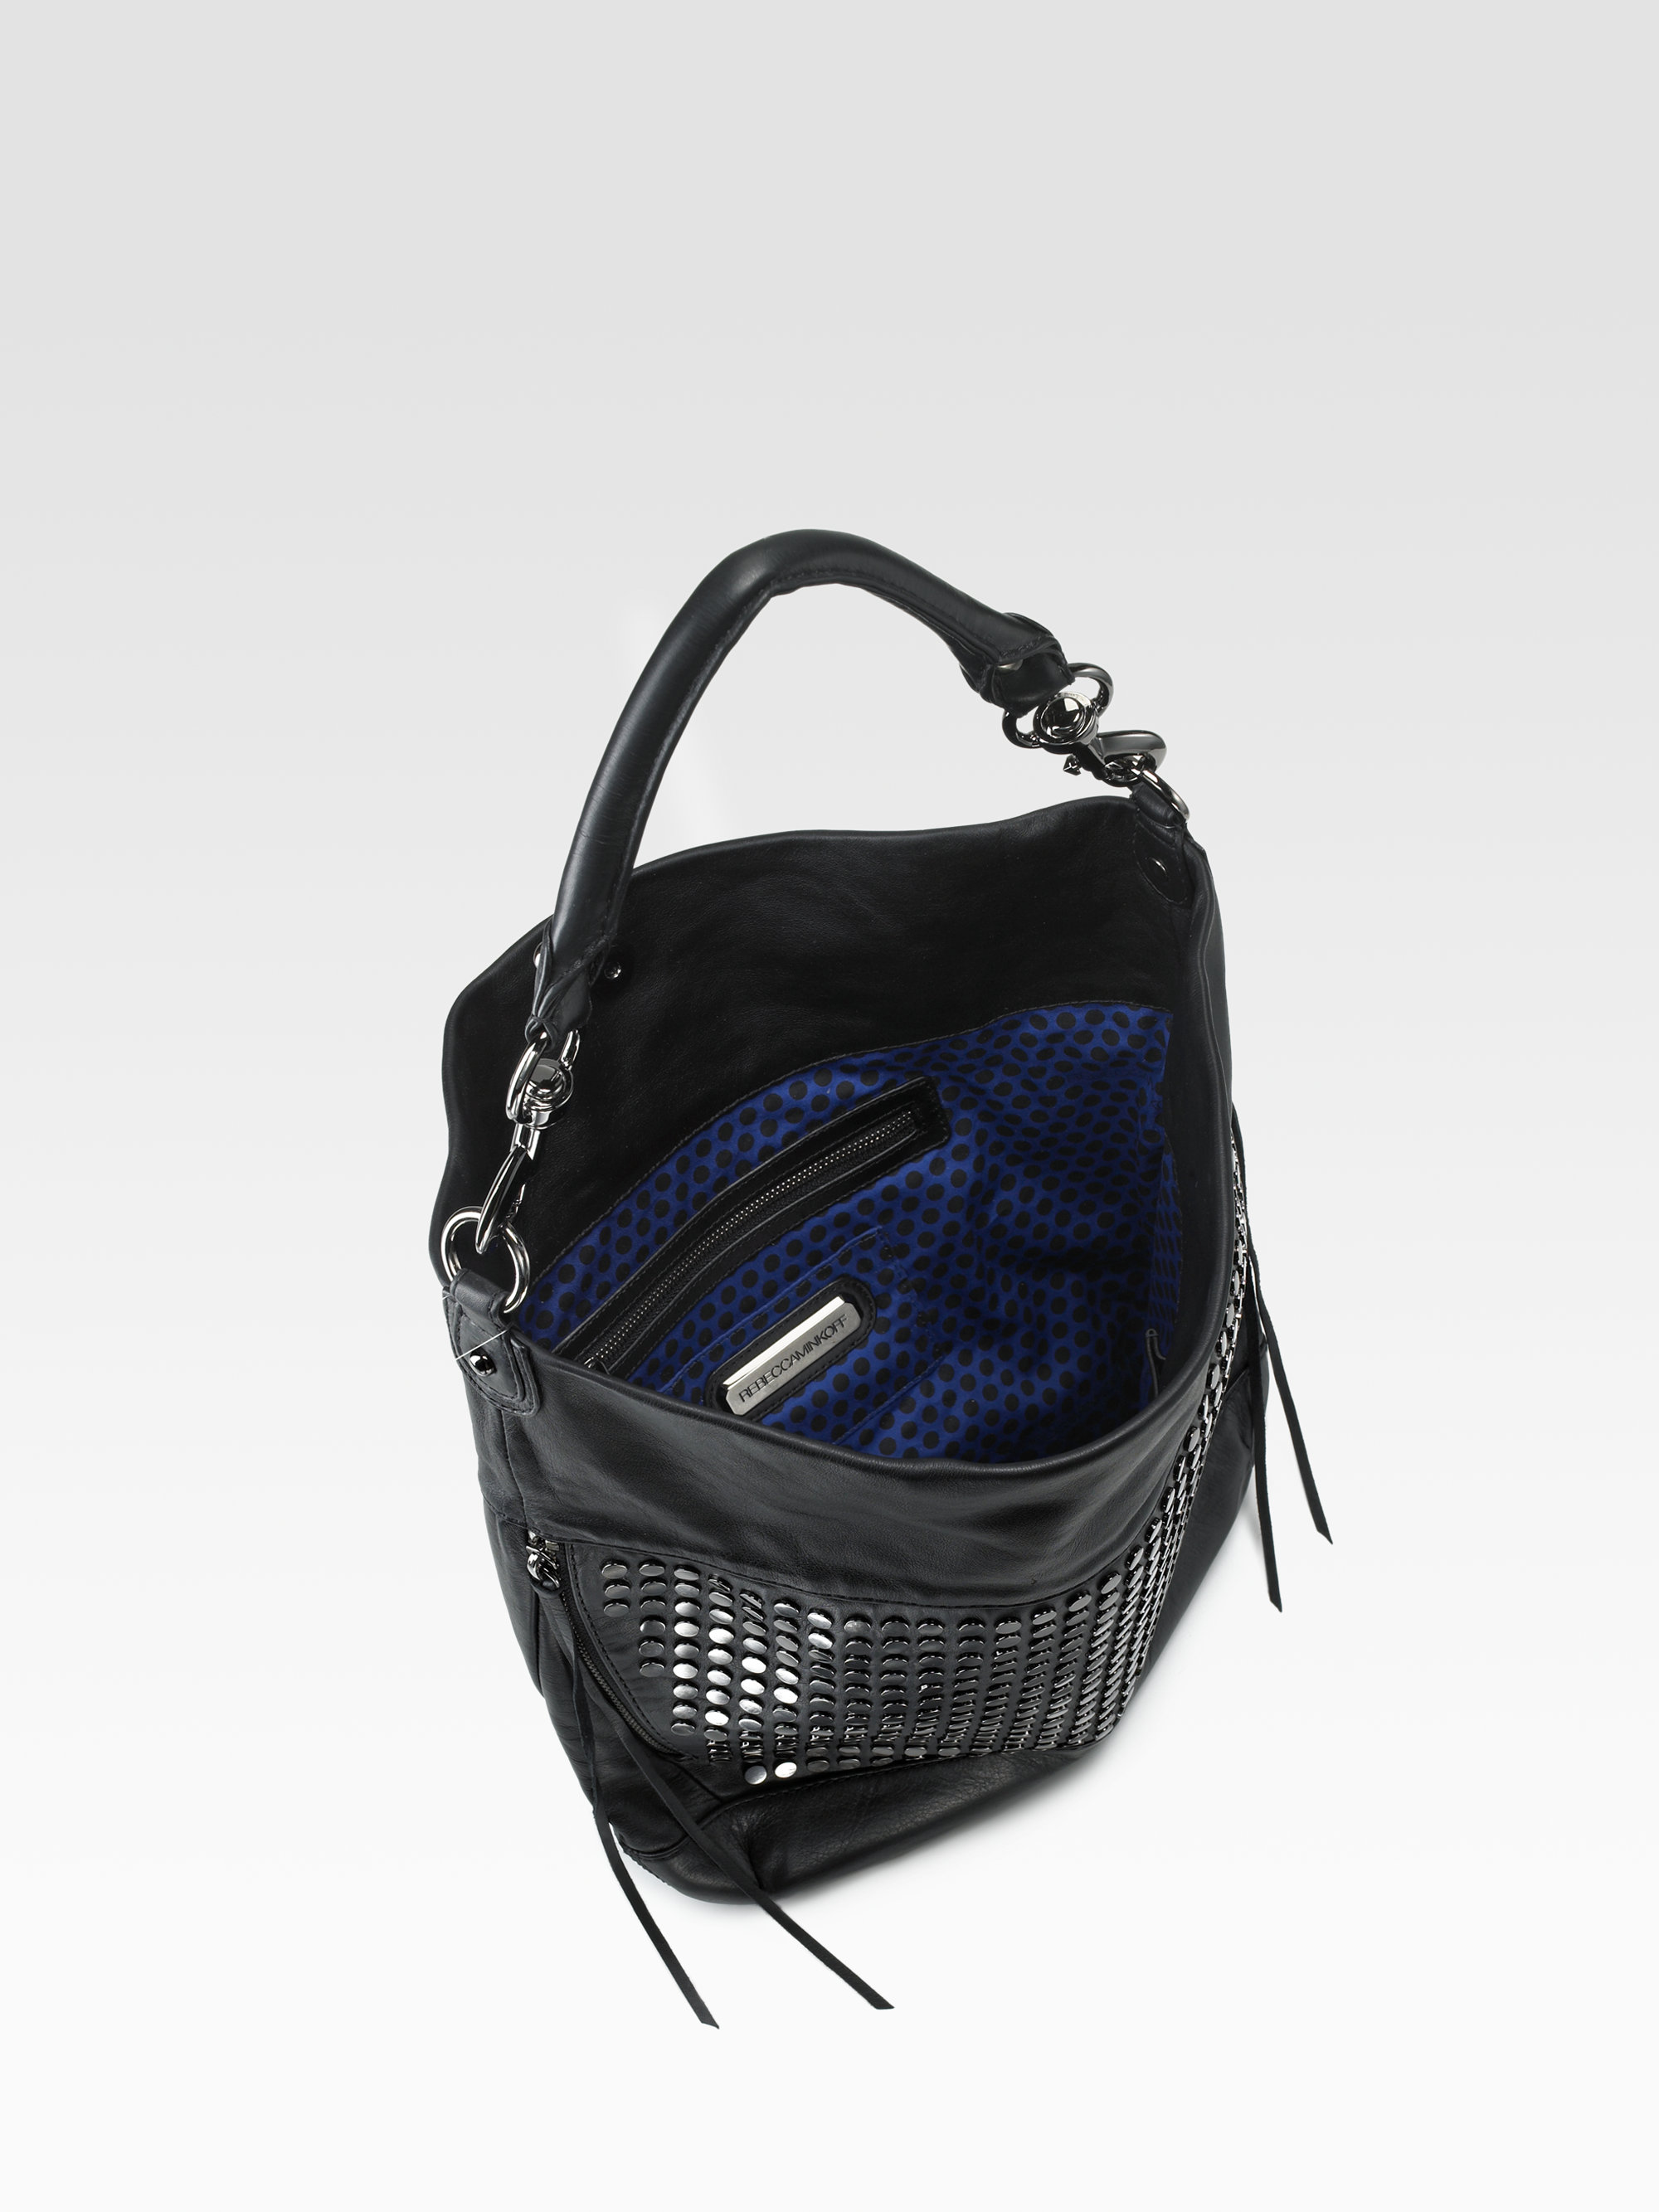 Rebecca Minkoff True Love Studded Hobo Bag in Black - Lyst